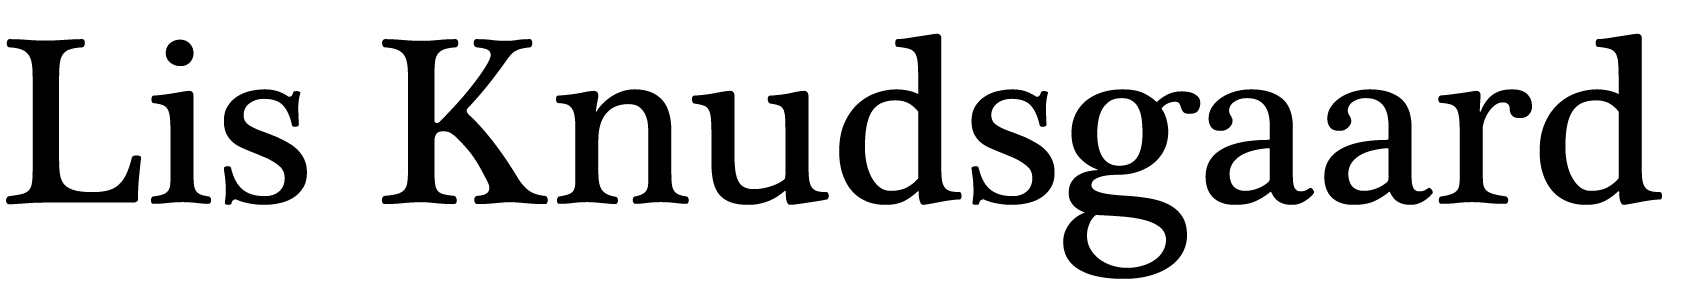 rytter-sponsorer-2015/lisknudsgaard_logo.jpg